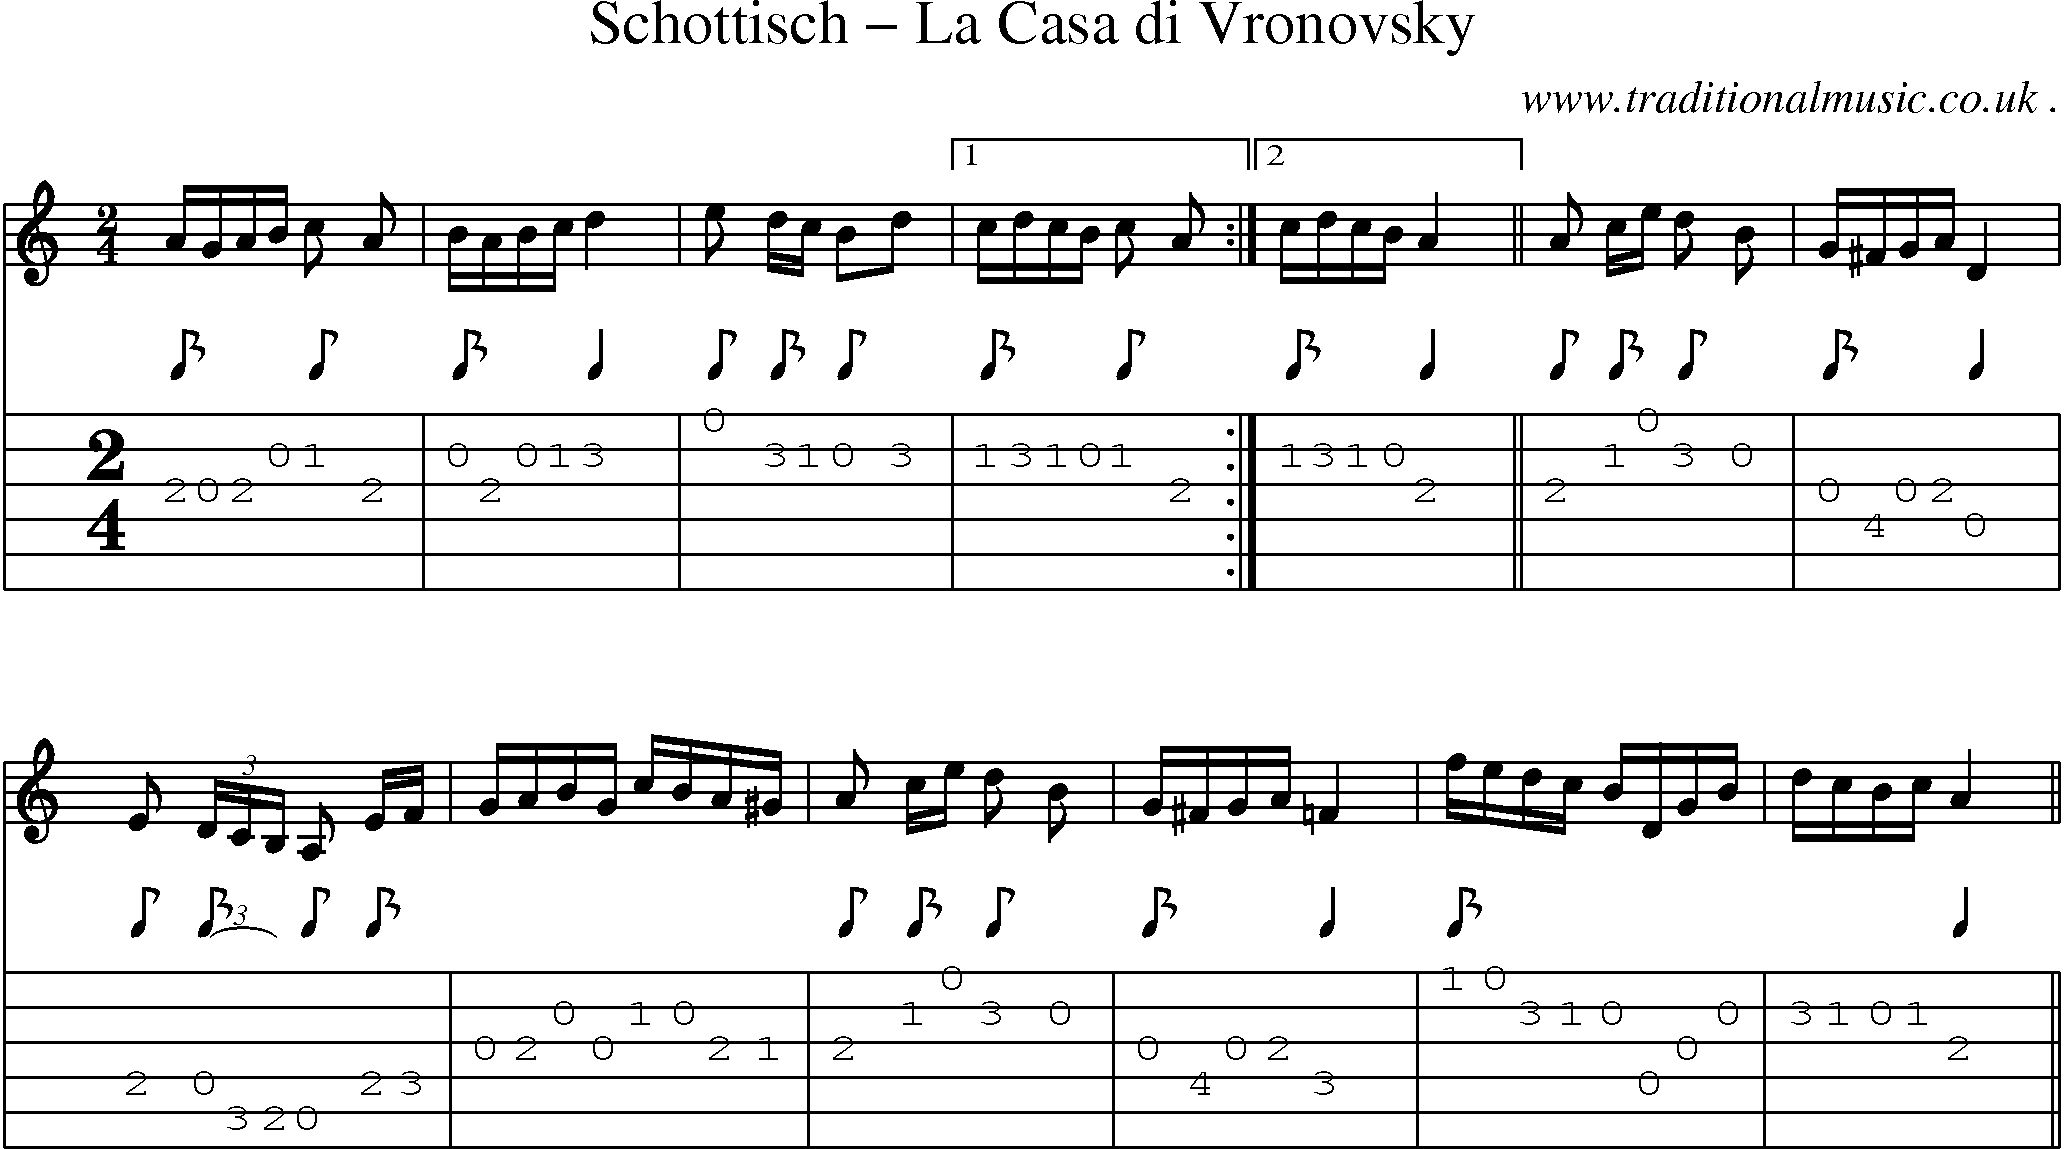 Sheet-Music and Guitar Tabs for Schottisch La Casa Di Vronovsky